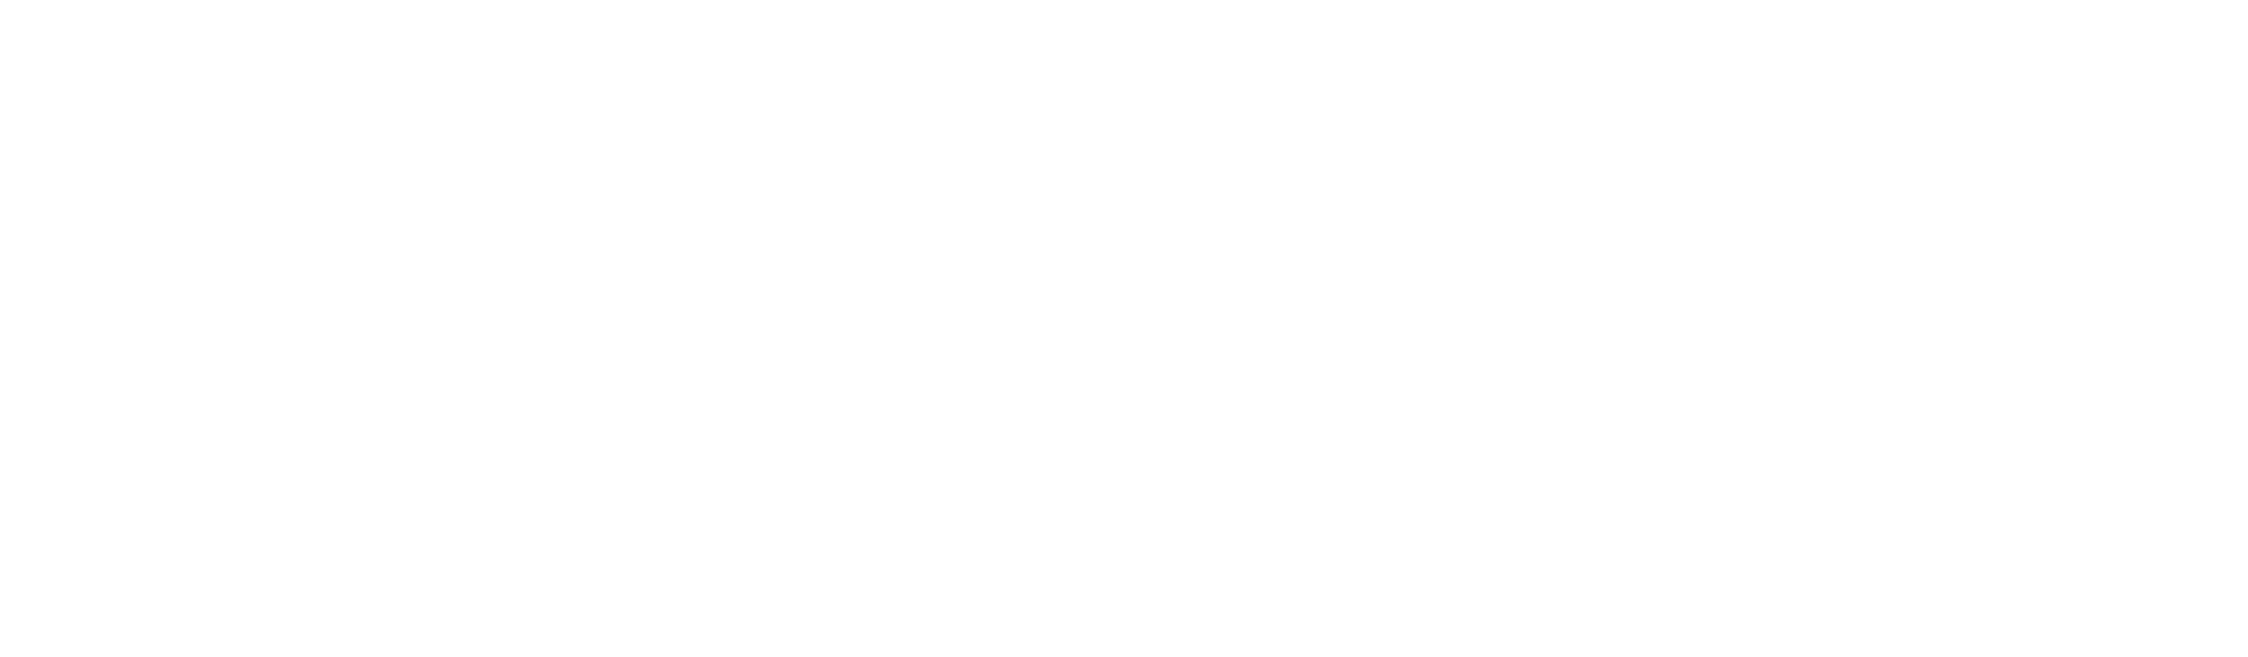 Farmington Hills Special Services